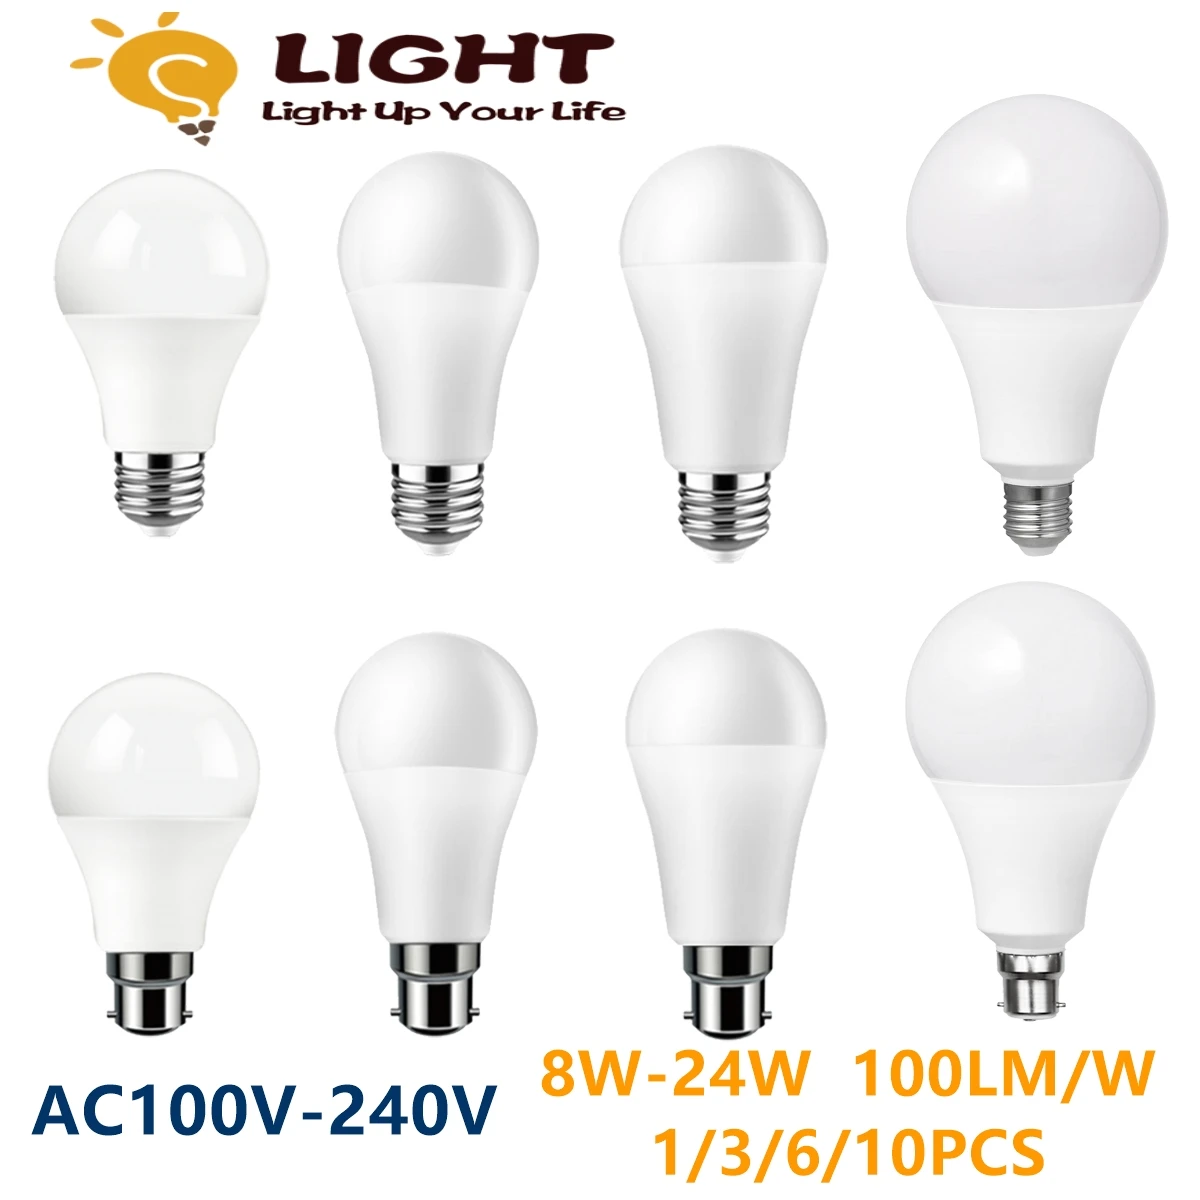 

1-10PCS LED bulb full voltage AC120V 220V 8W-24W E27 B22 high lumen without flicker 3000K/4000K/6000K warm white light